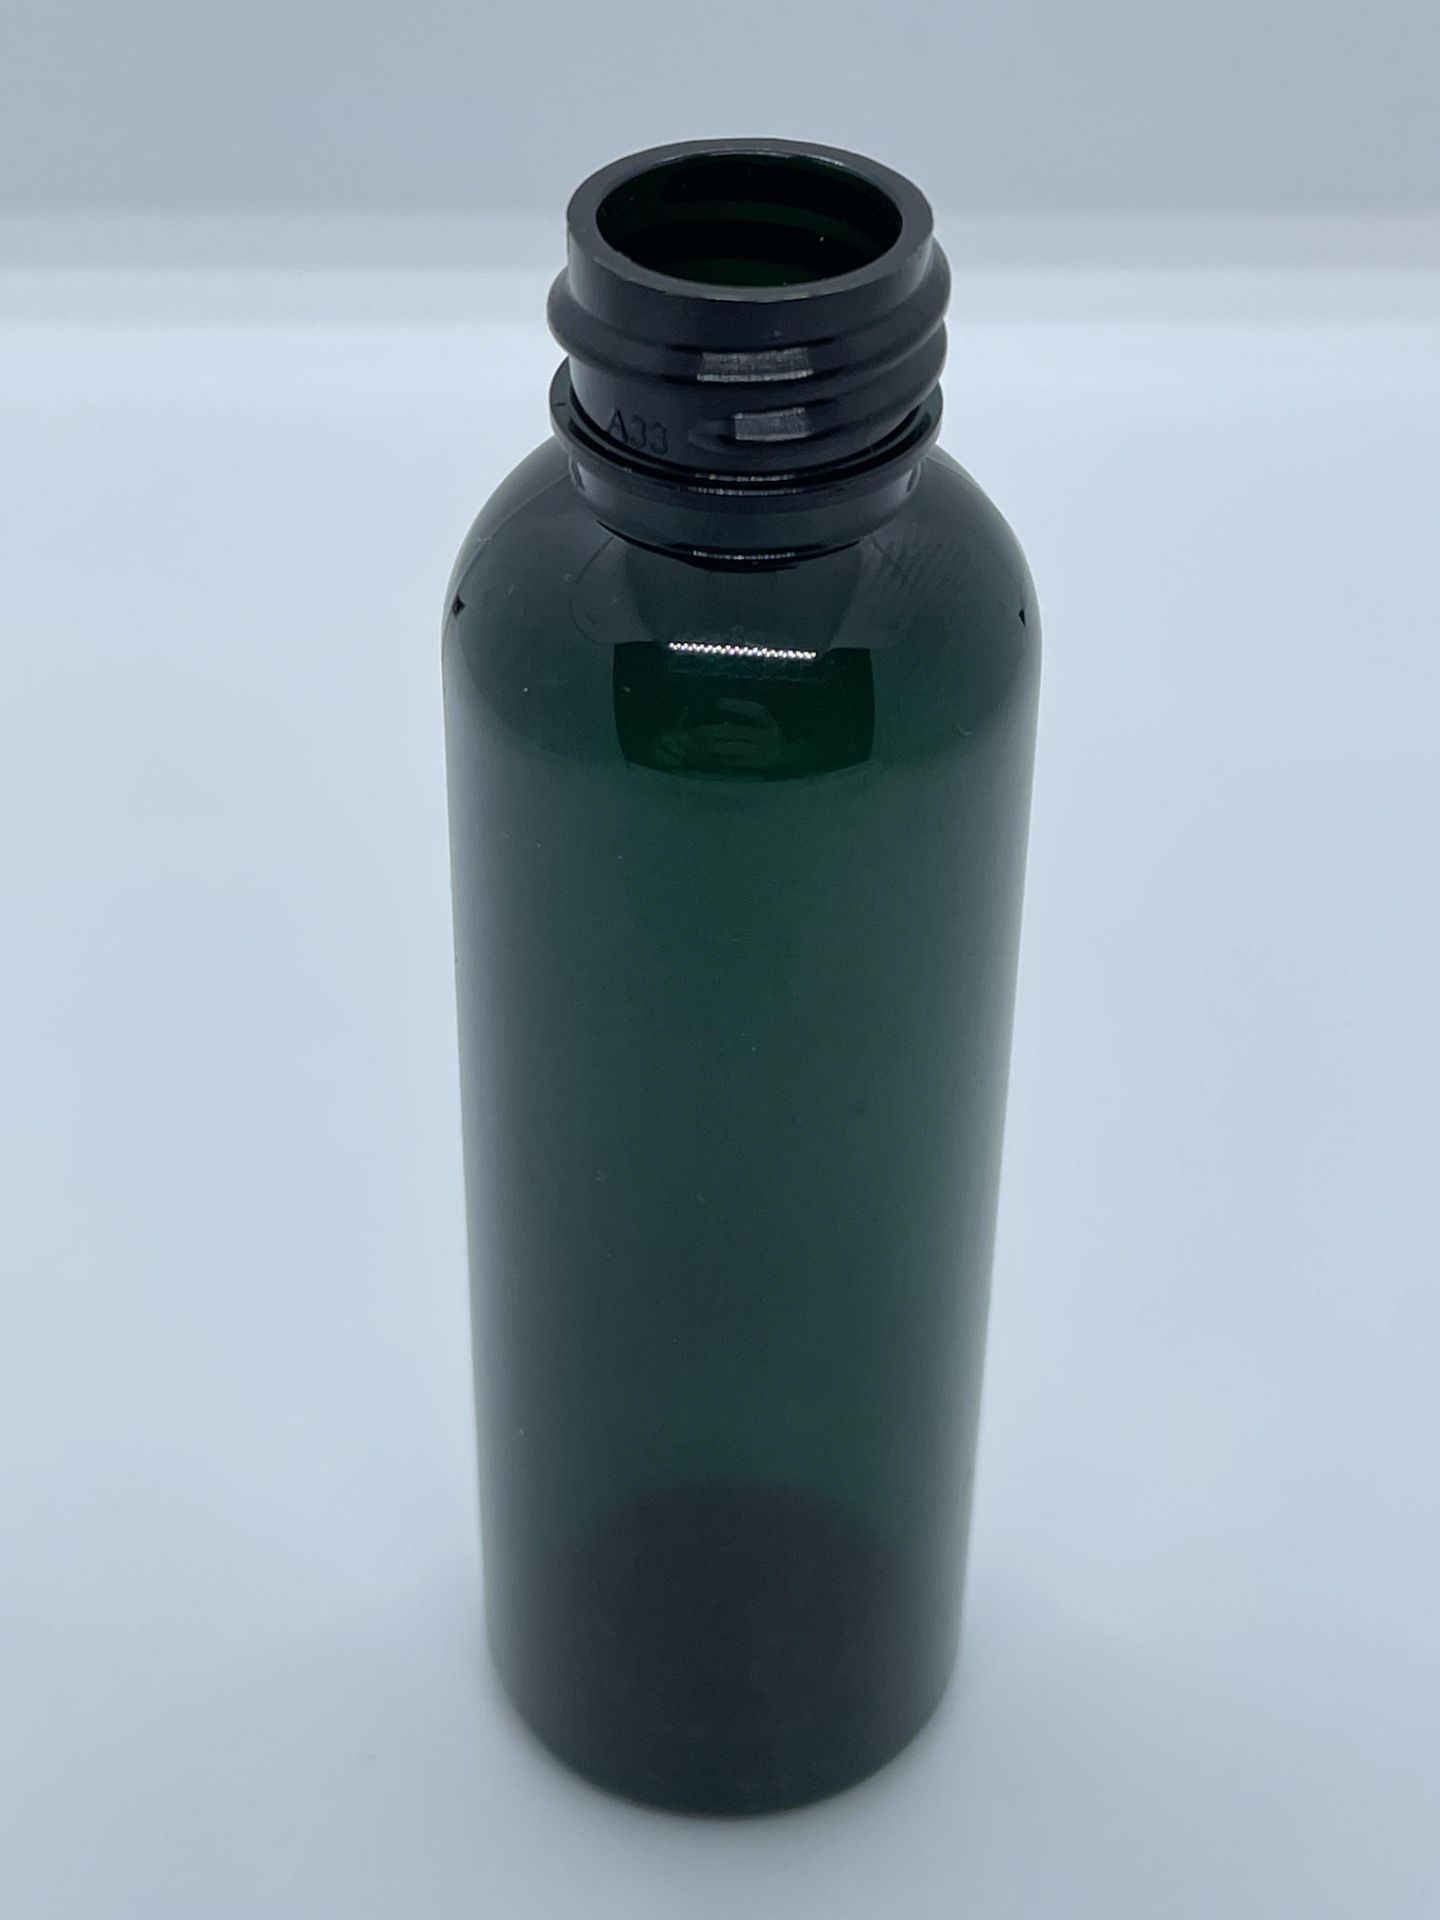 29,000 - Green Alpha Plastic 2 oz Empty Bottles, 20-410 Threading Neck, 4 1/8" Tall, 1.25" Diameter - Image 2 of 4